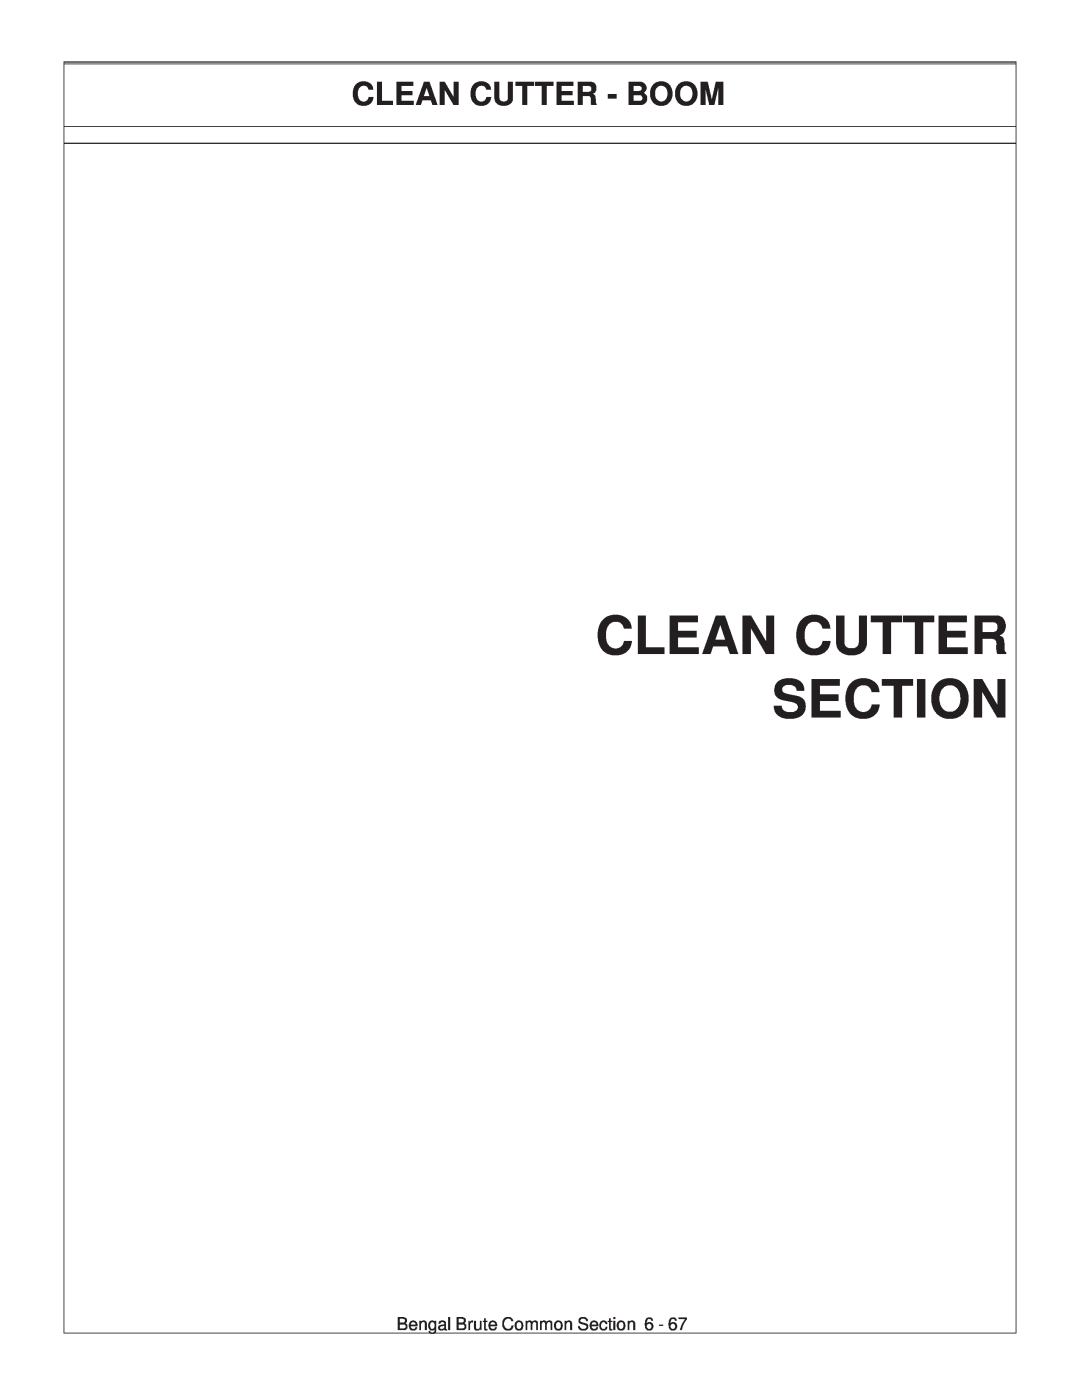 Tiger JD 62-6420 manual Clean Cutter Section, Clean Cutter - Boom 